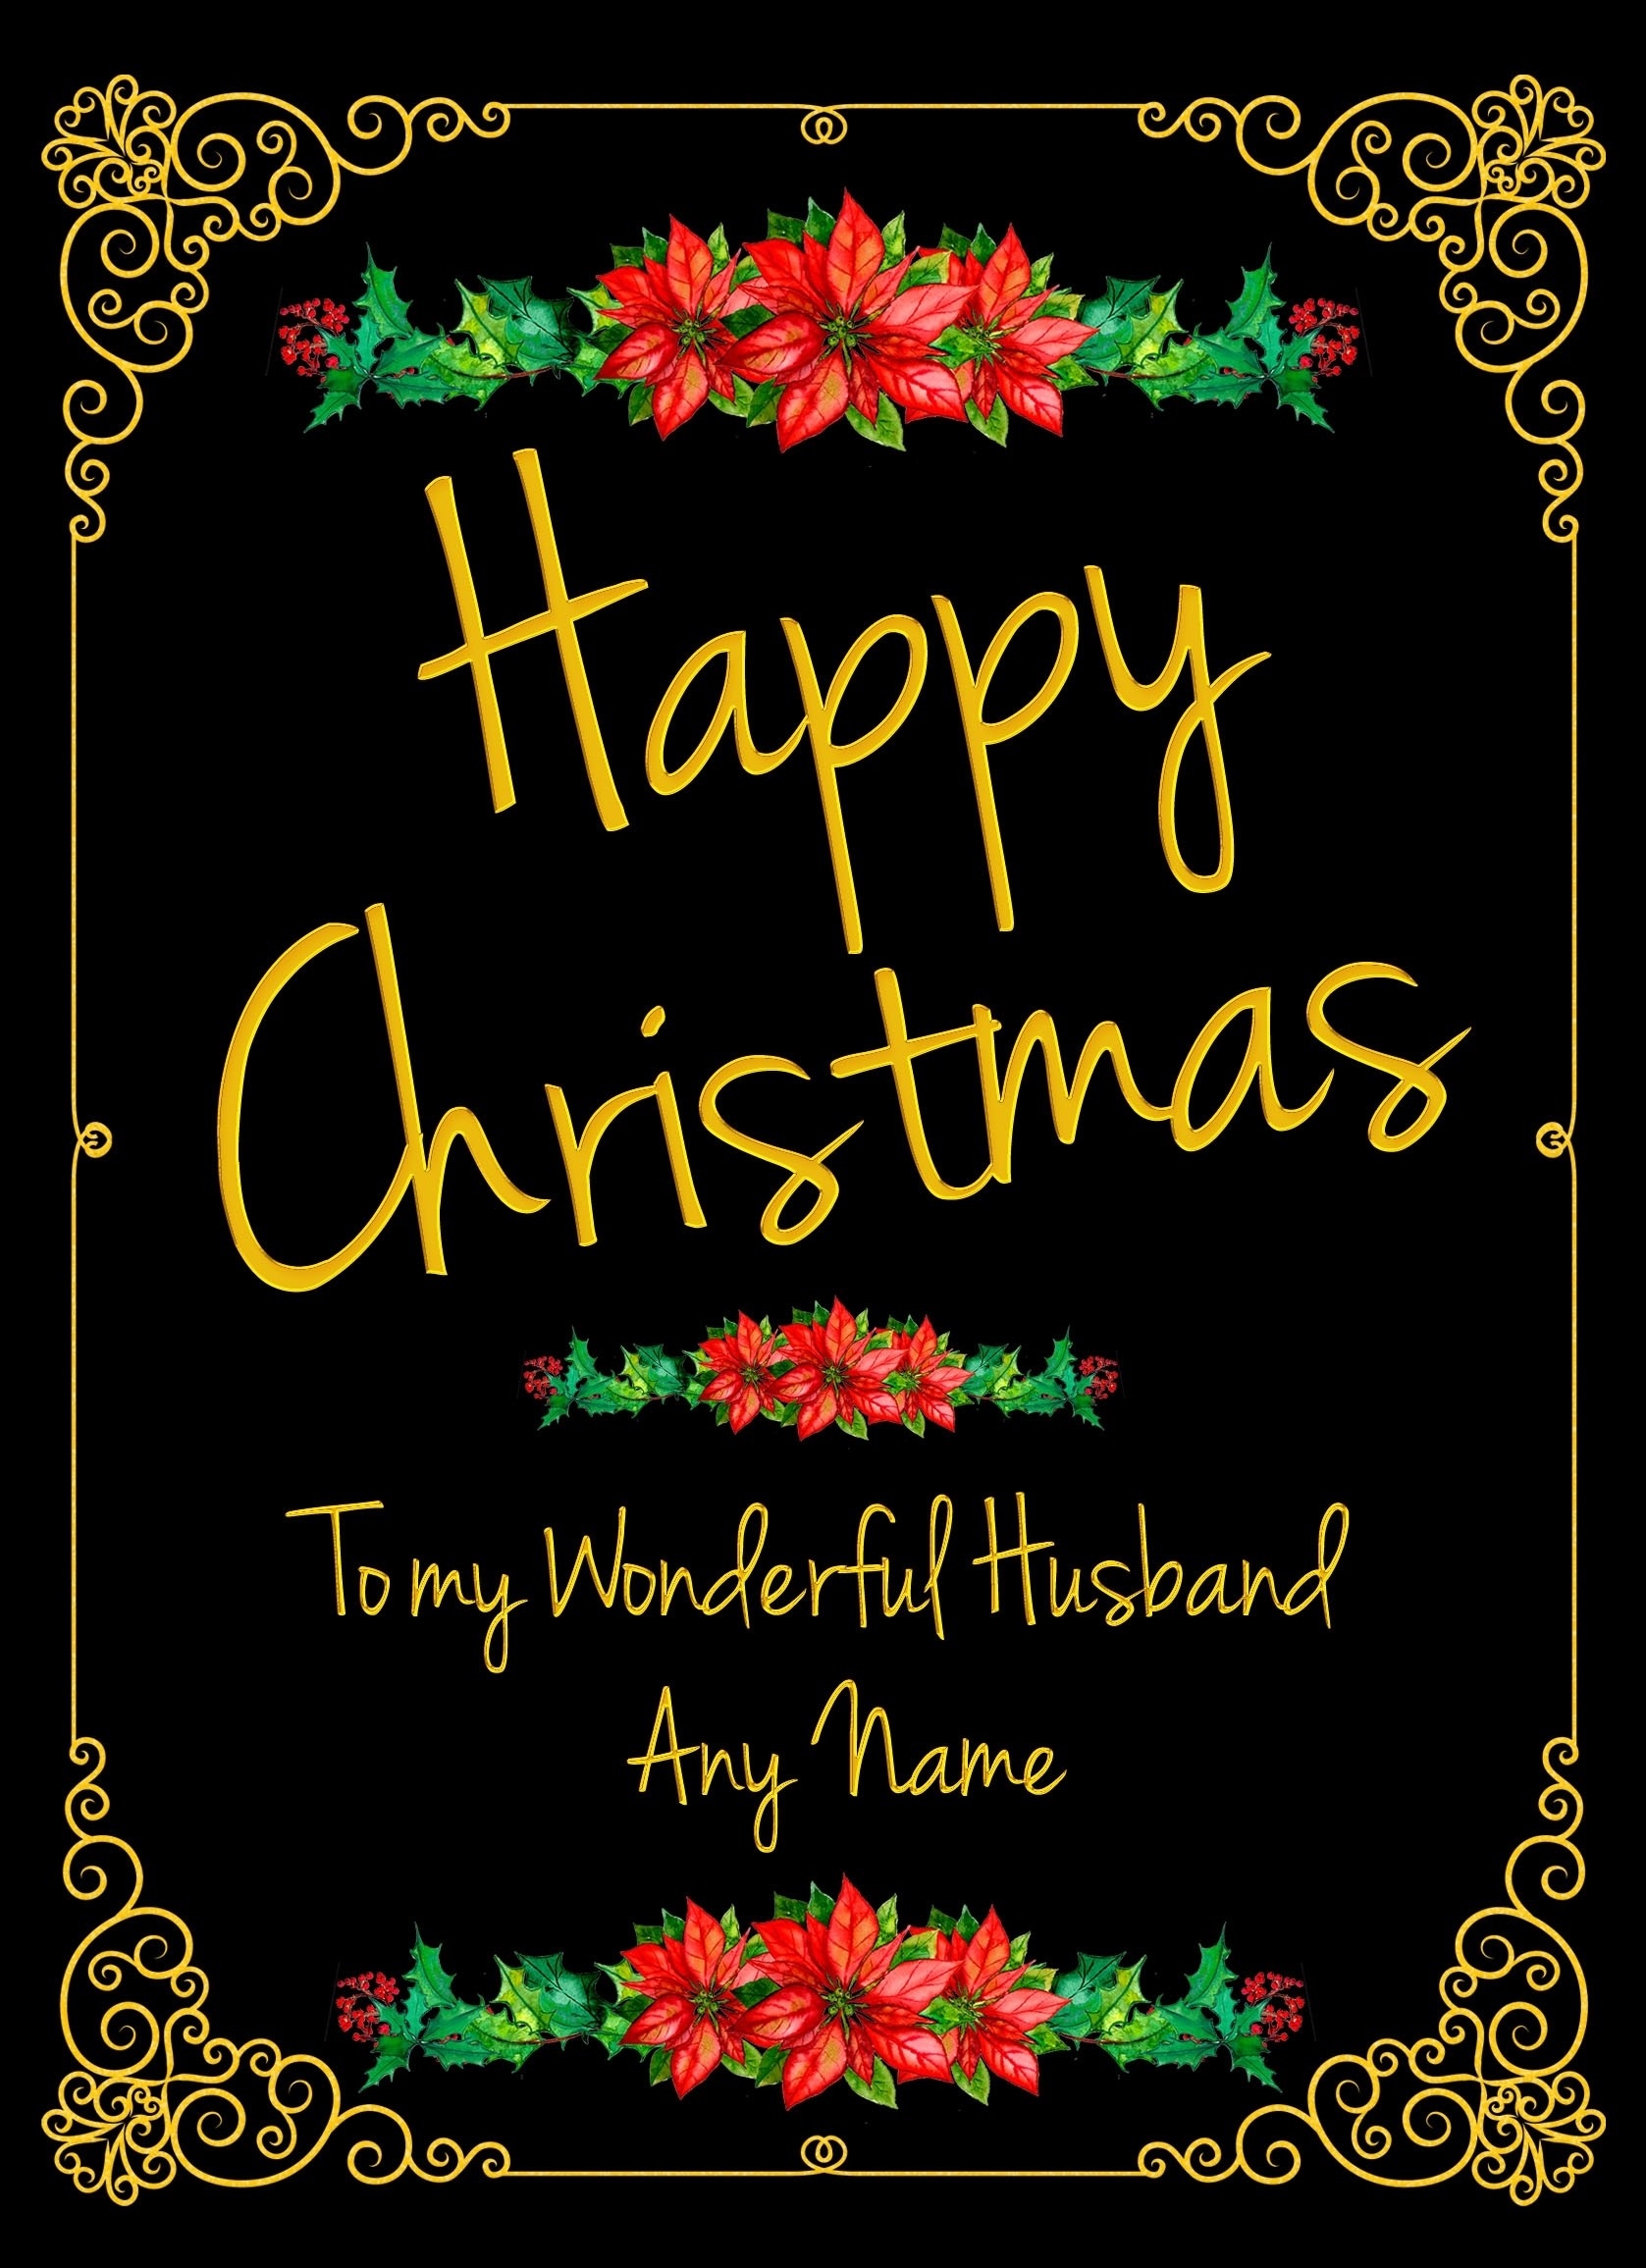 Personalised Christmas Card For Husband (Wonderful)